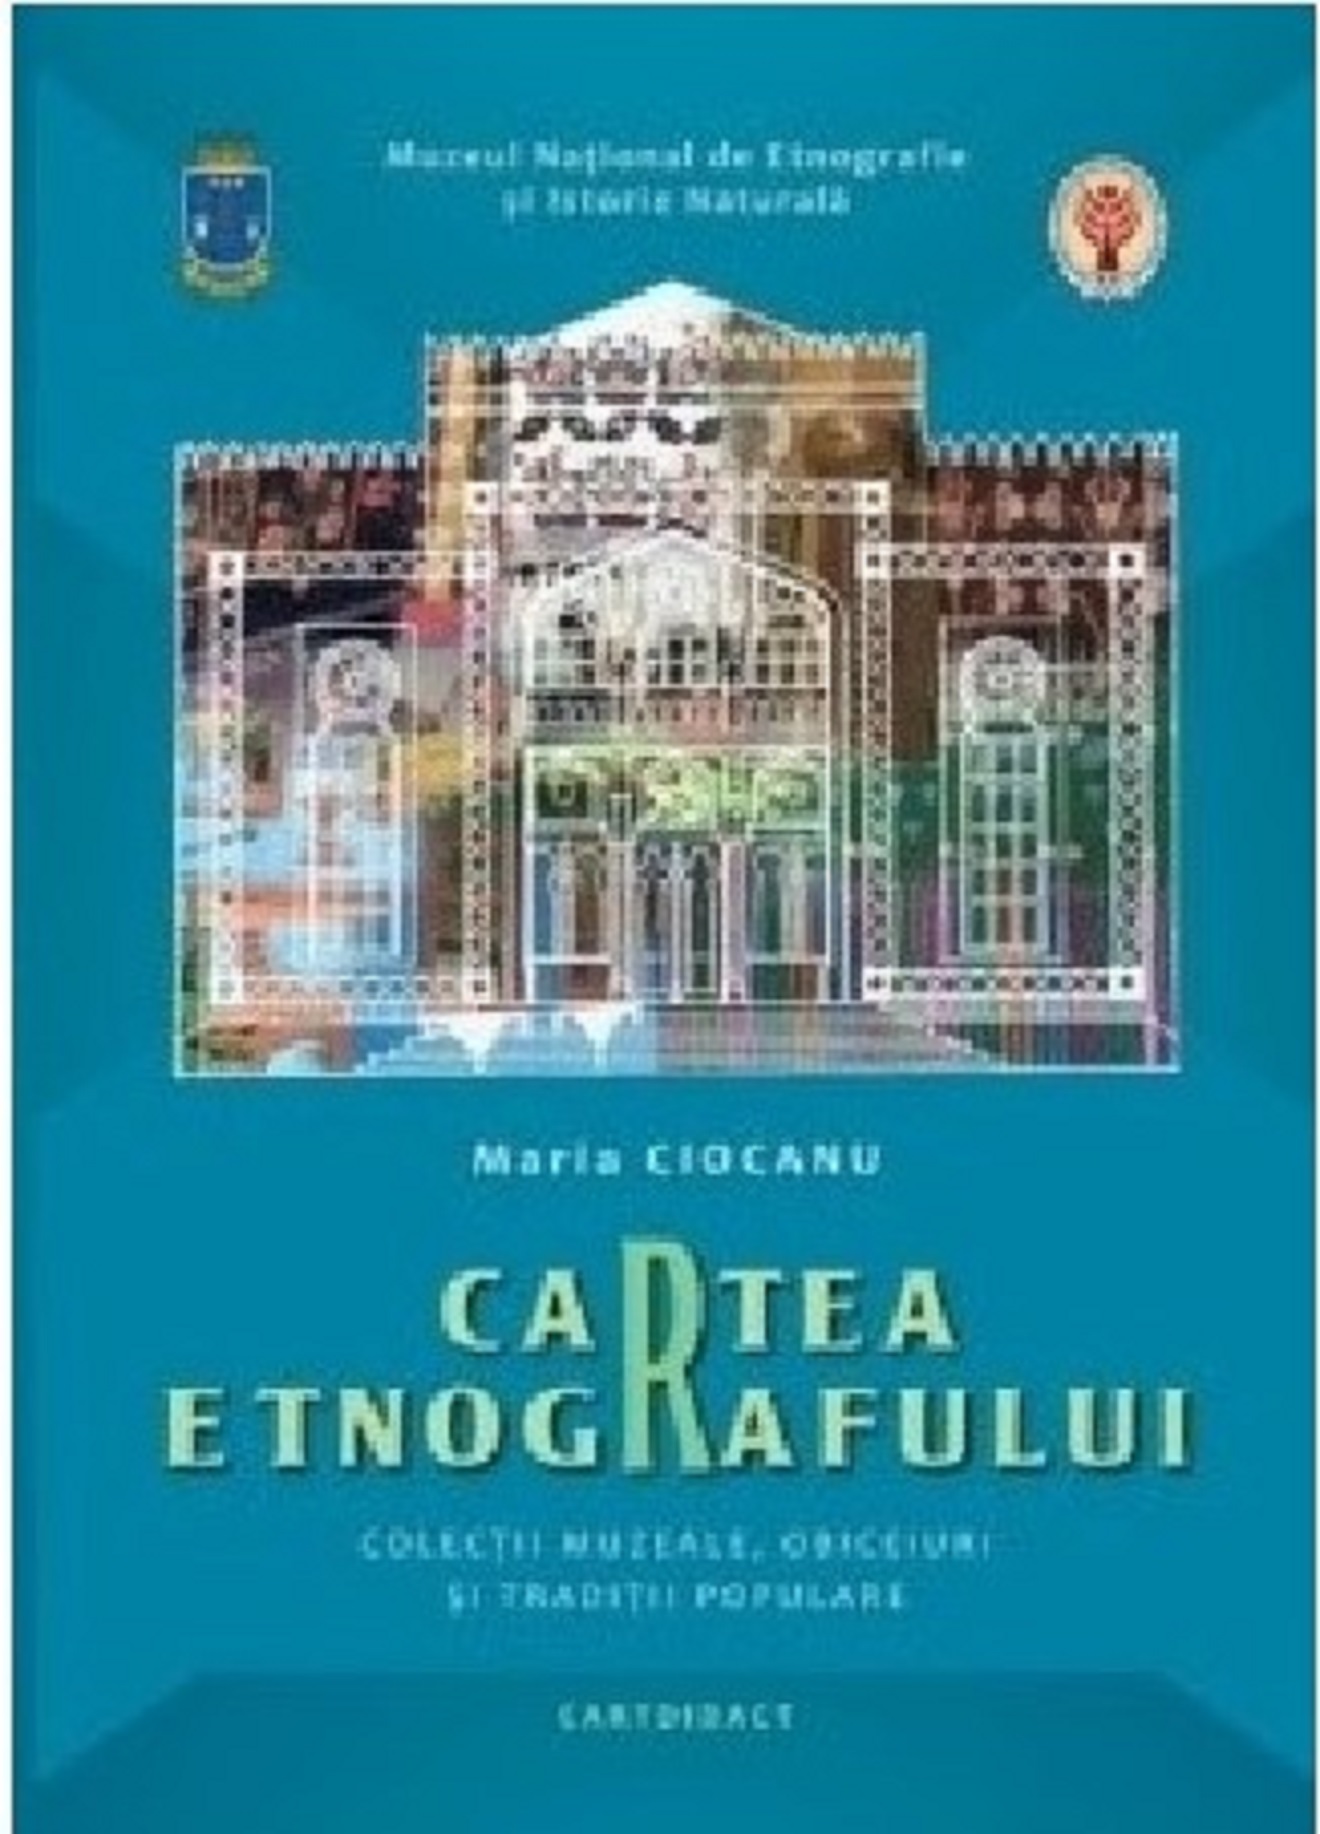 Cartea etnografului | Maria Ciobanu Cartdidact poza bestsellers.ro